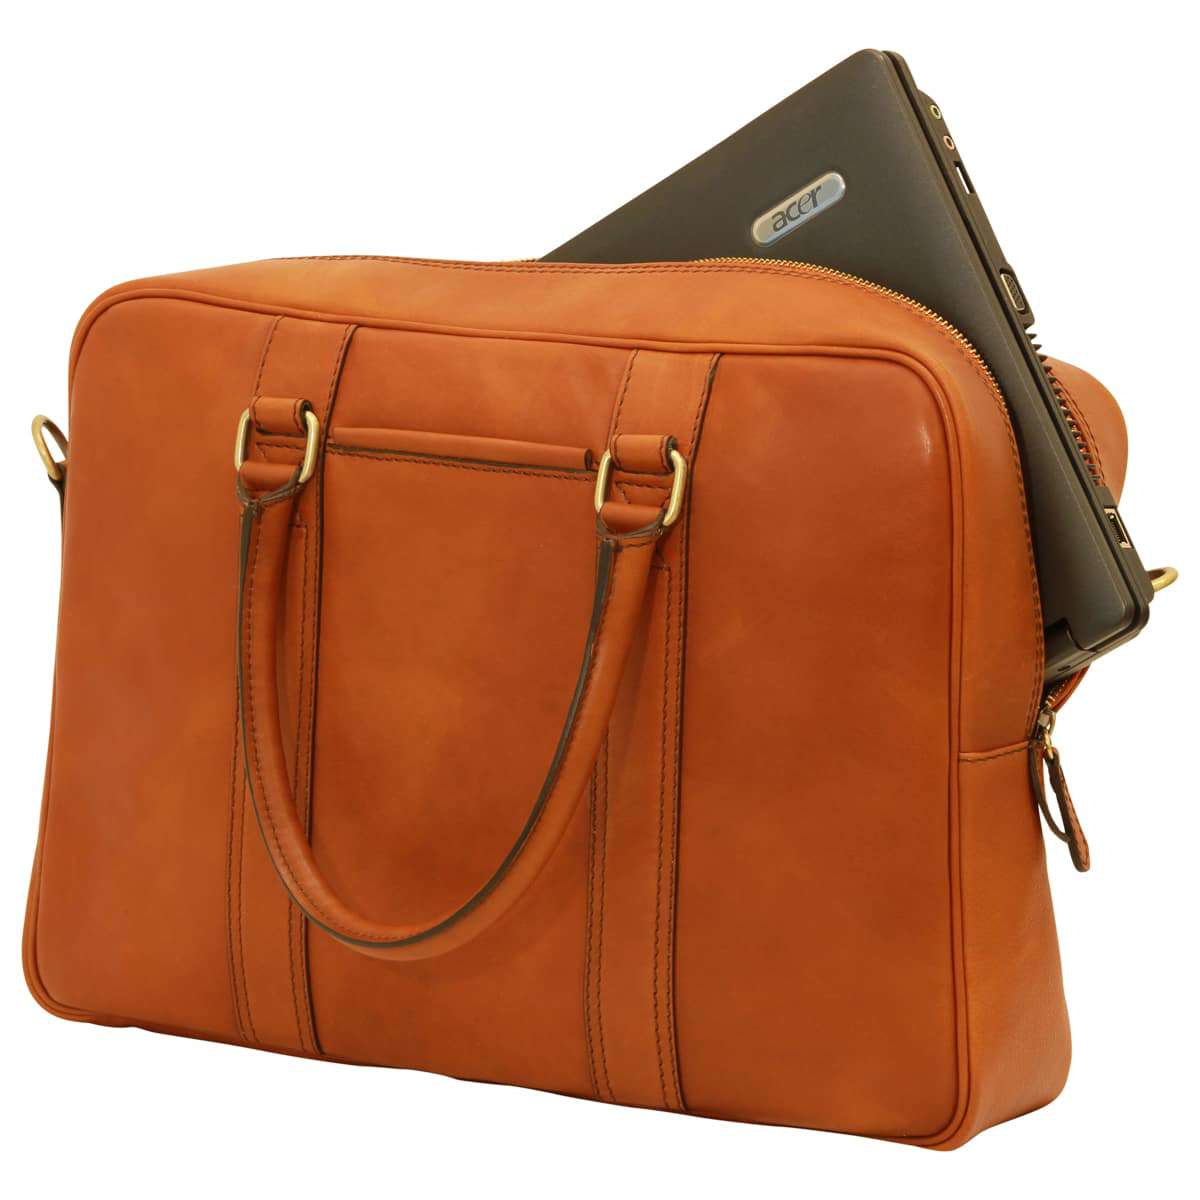 Soft Calfskin Leather Briefcase - Gold | 030191CO UK | Old Angler Firenze